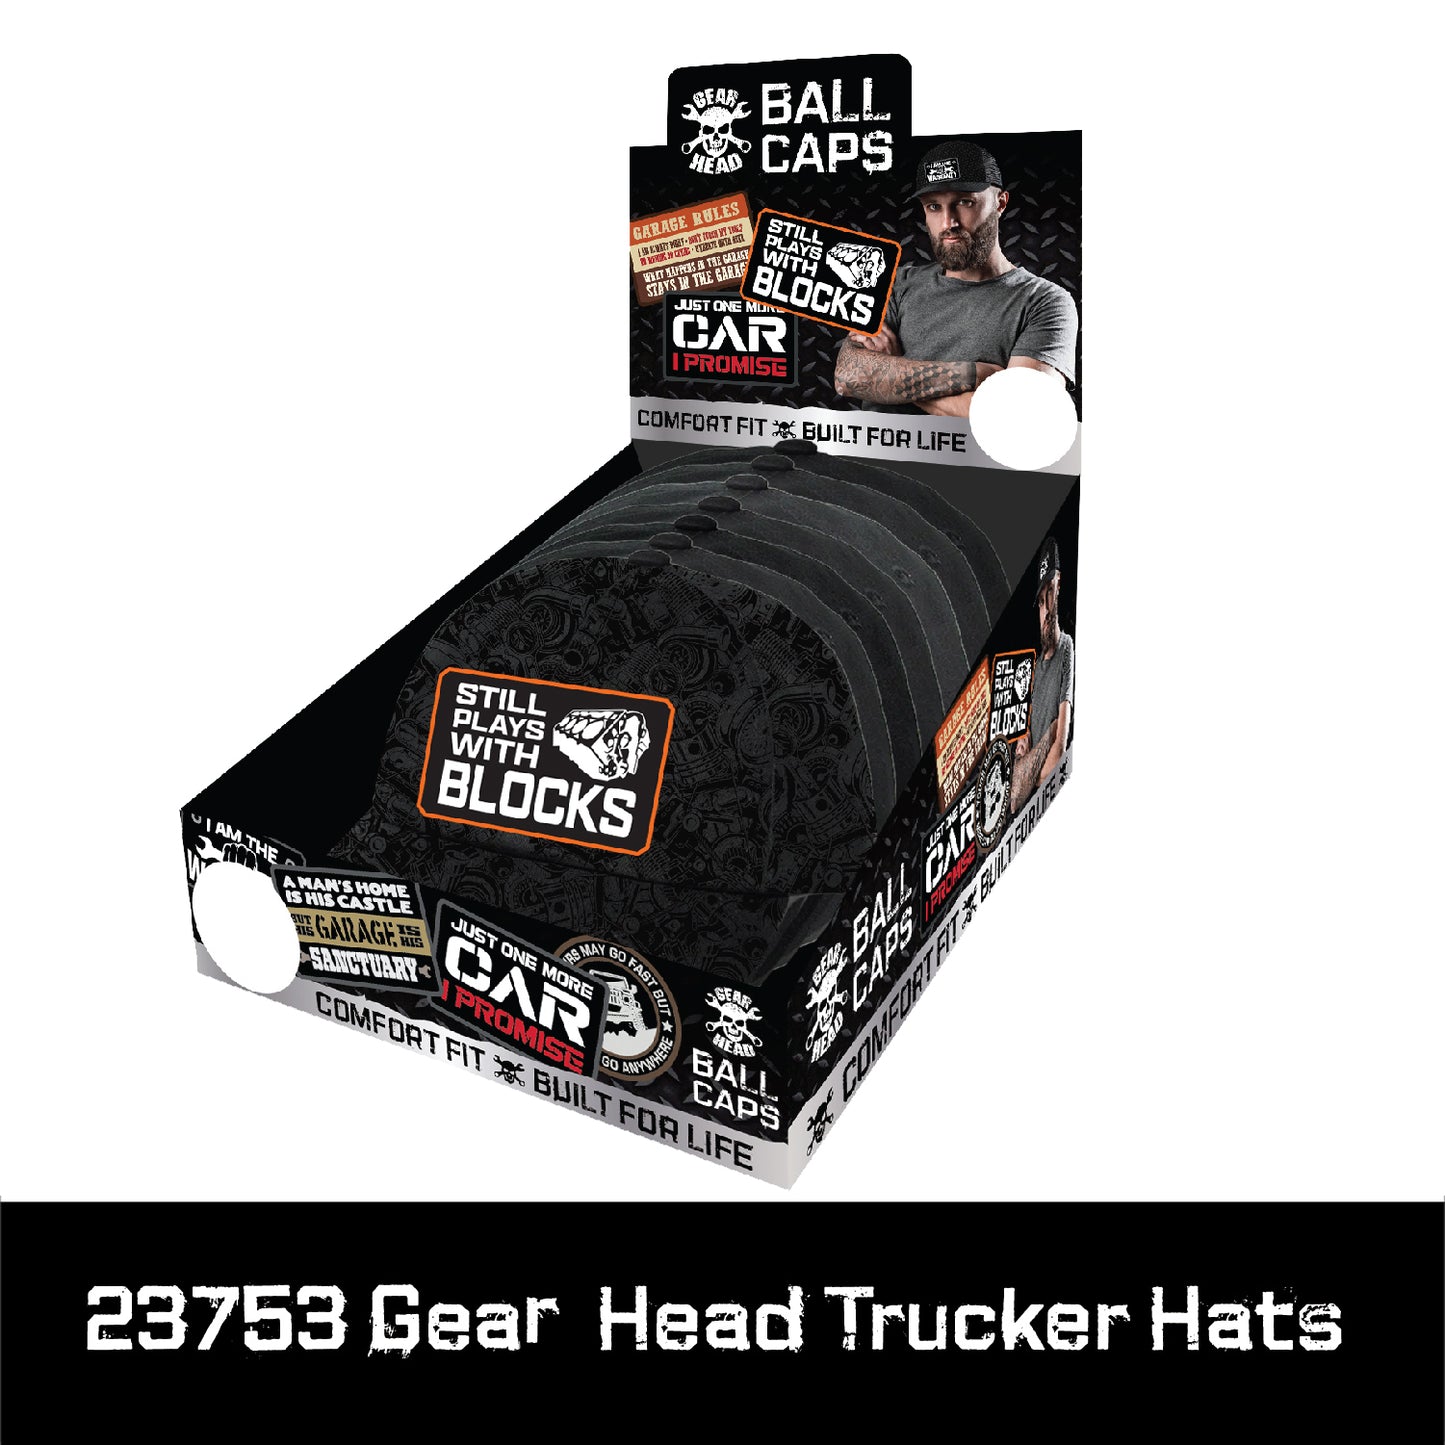 ITEM NUMBER 023753 GEAR HEAD TRUCKER HATS 6 PIECES PER DISPLAY